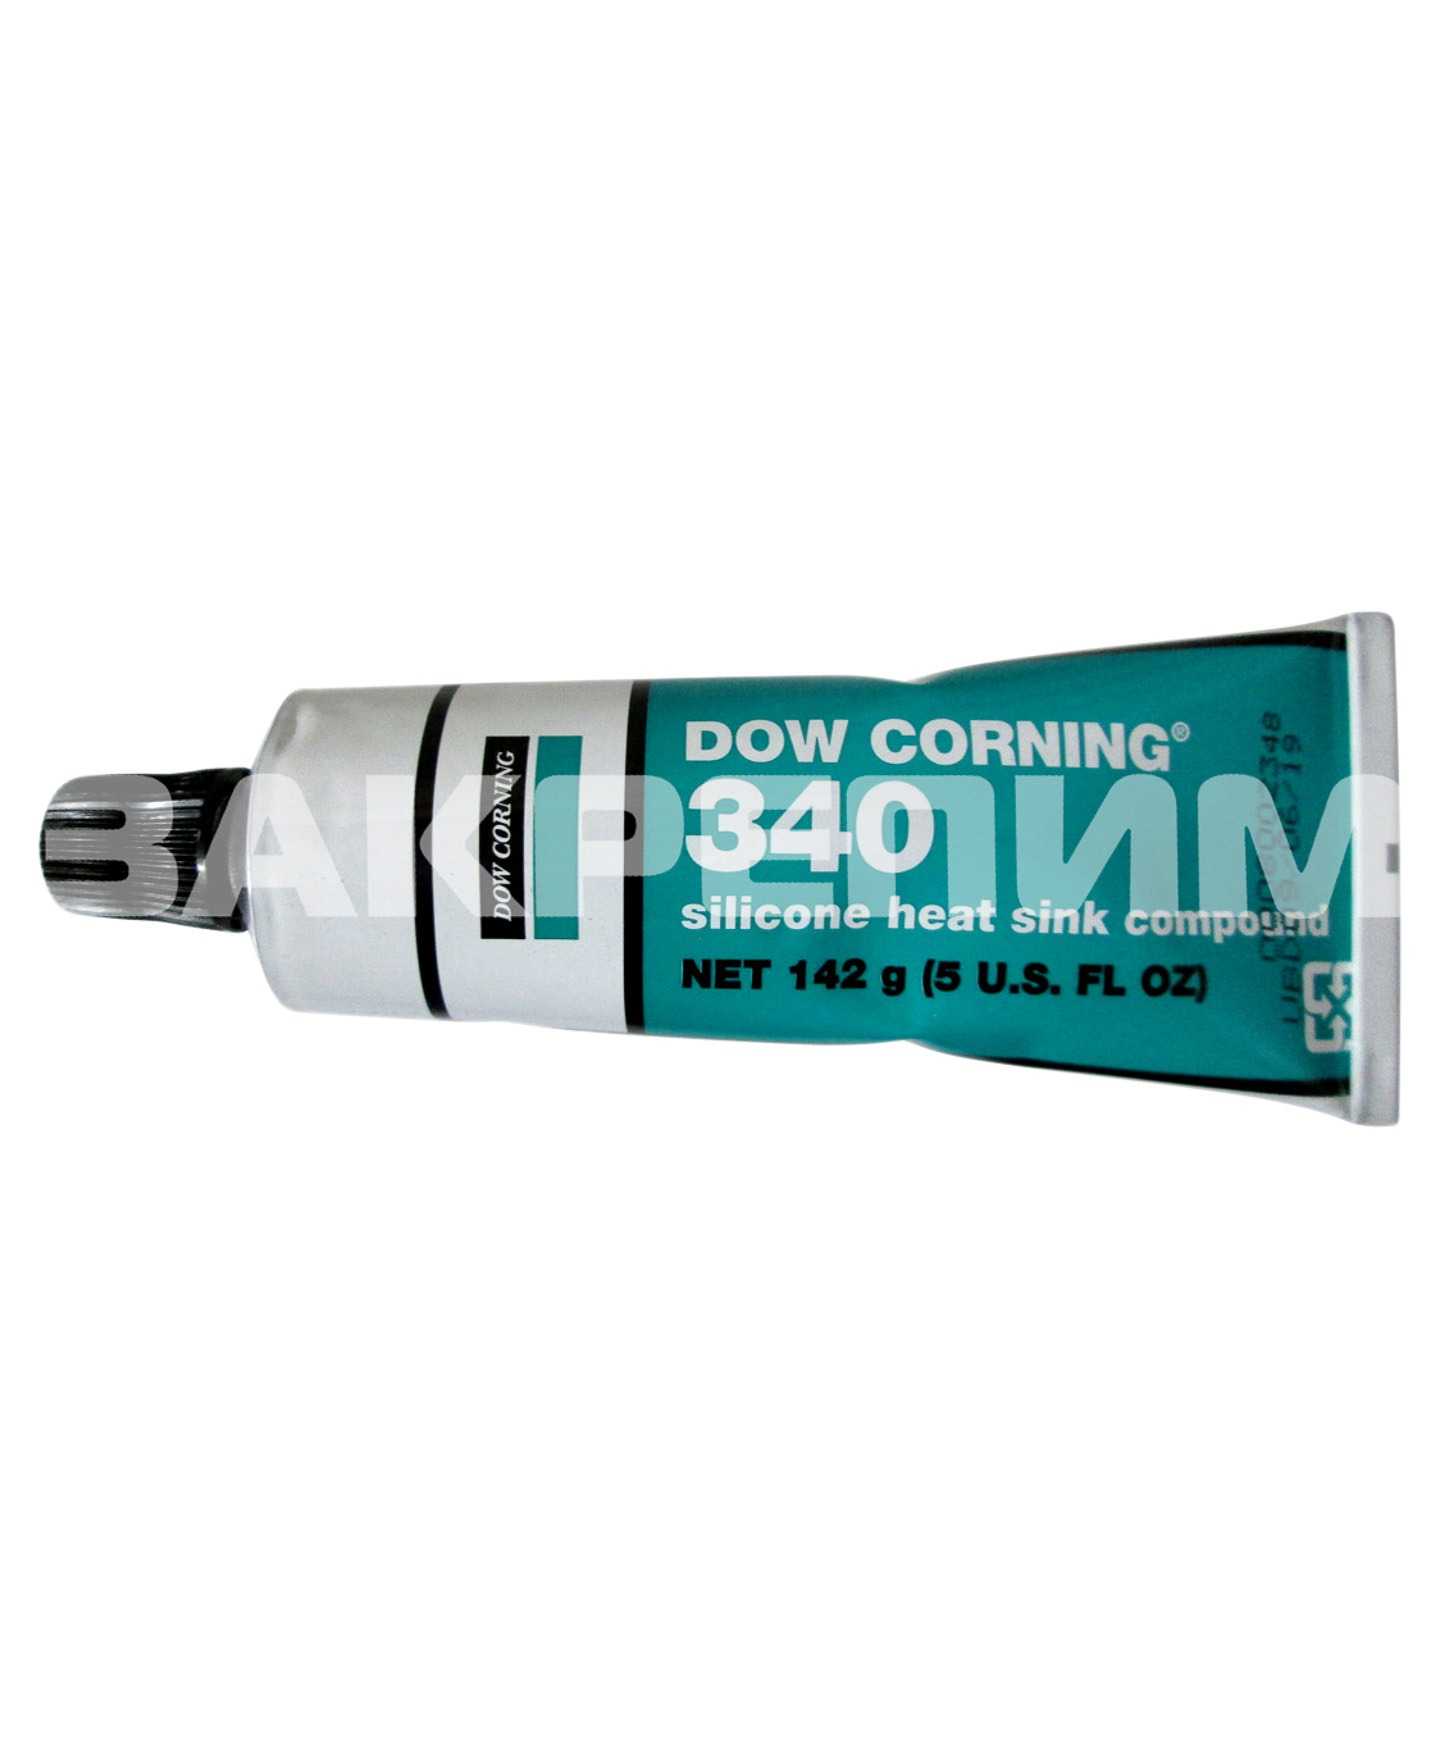 dow-corning-340